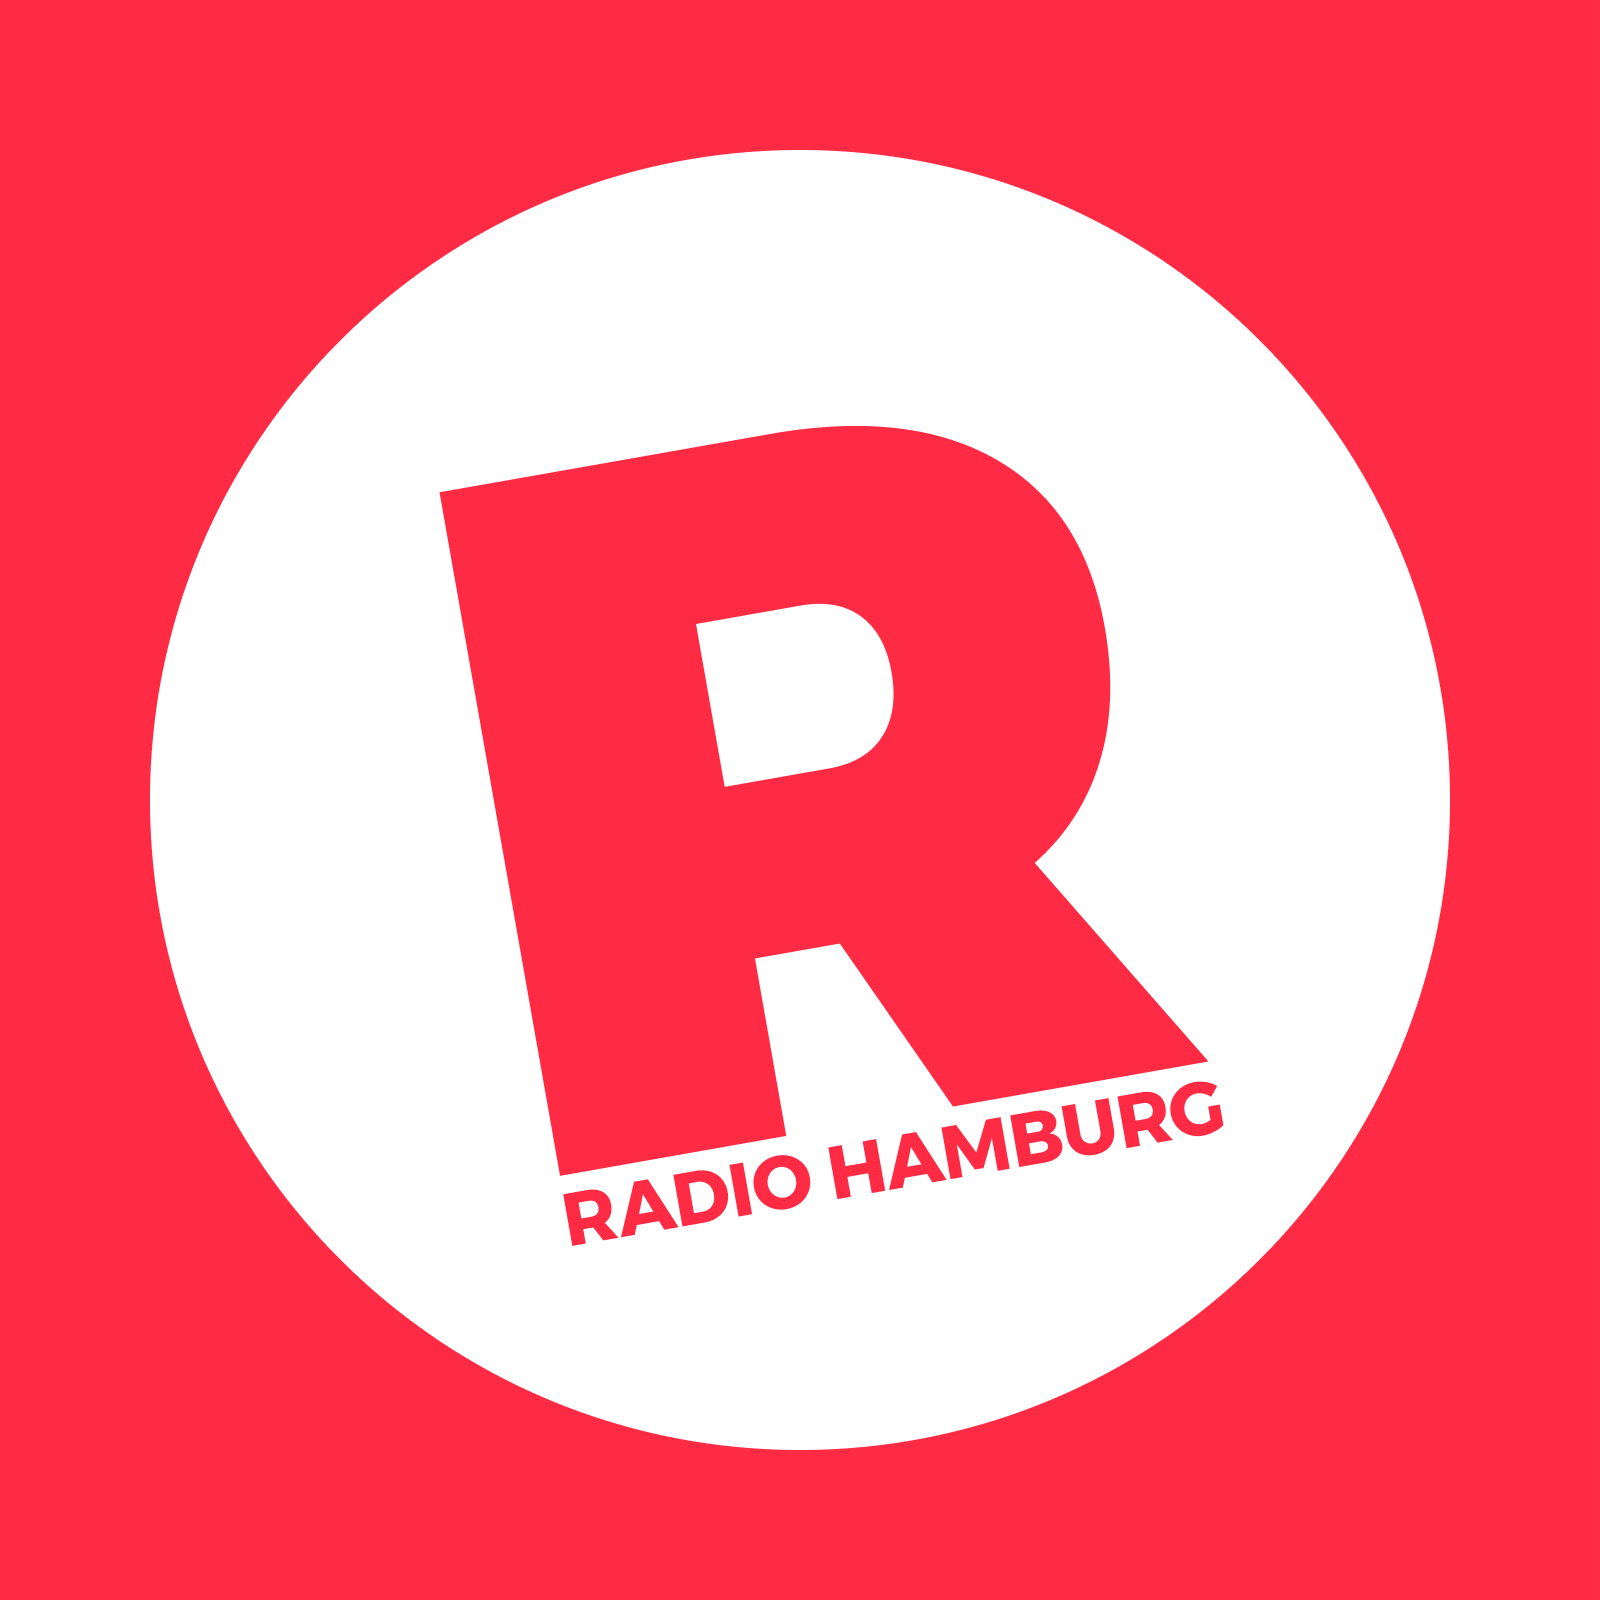 www.radiohamburg.de